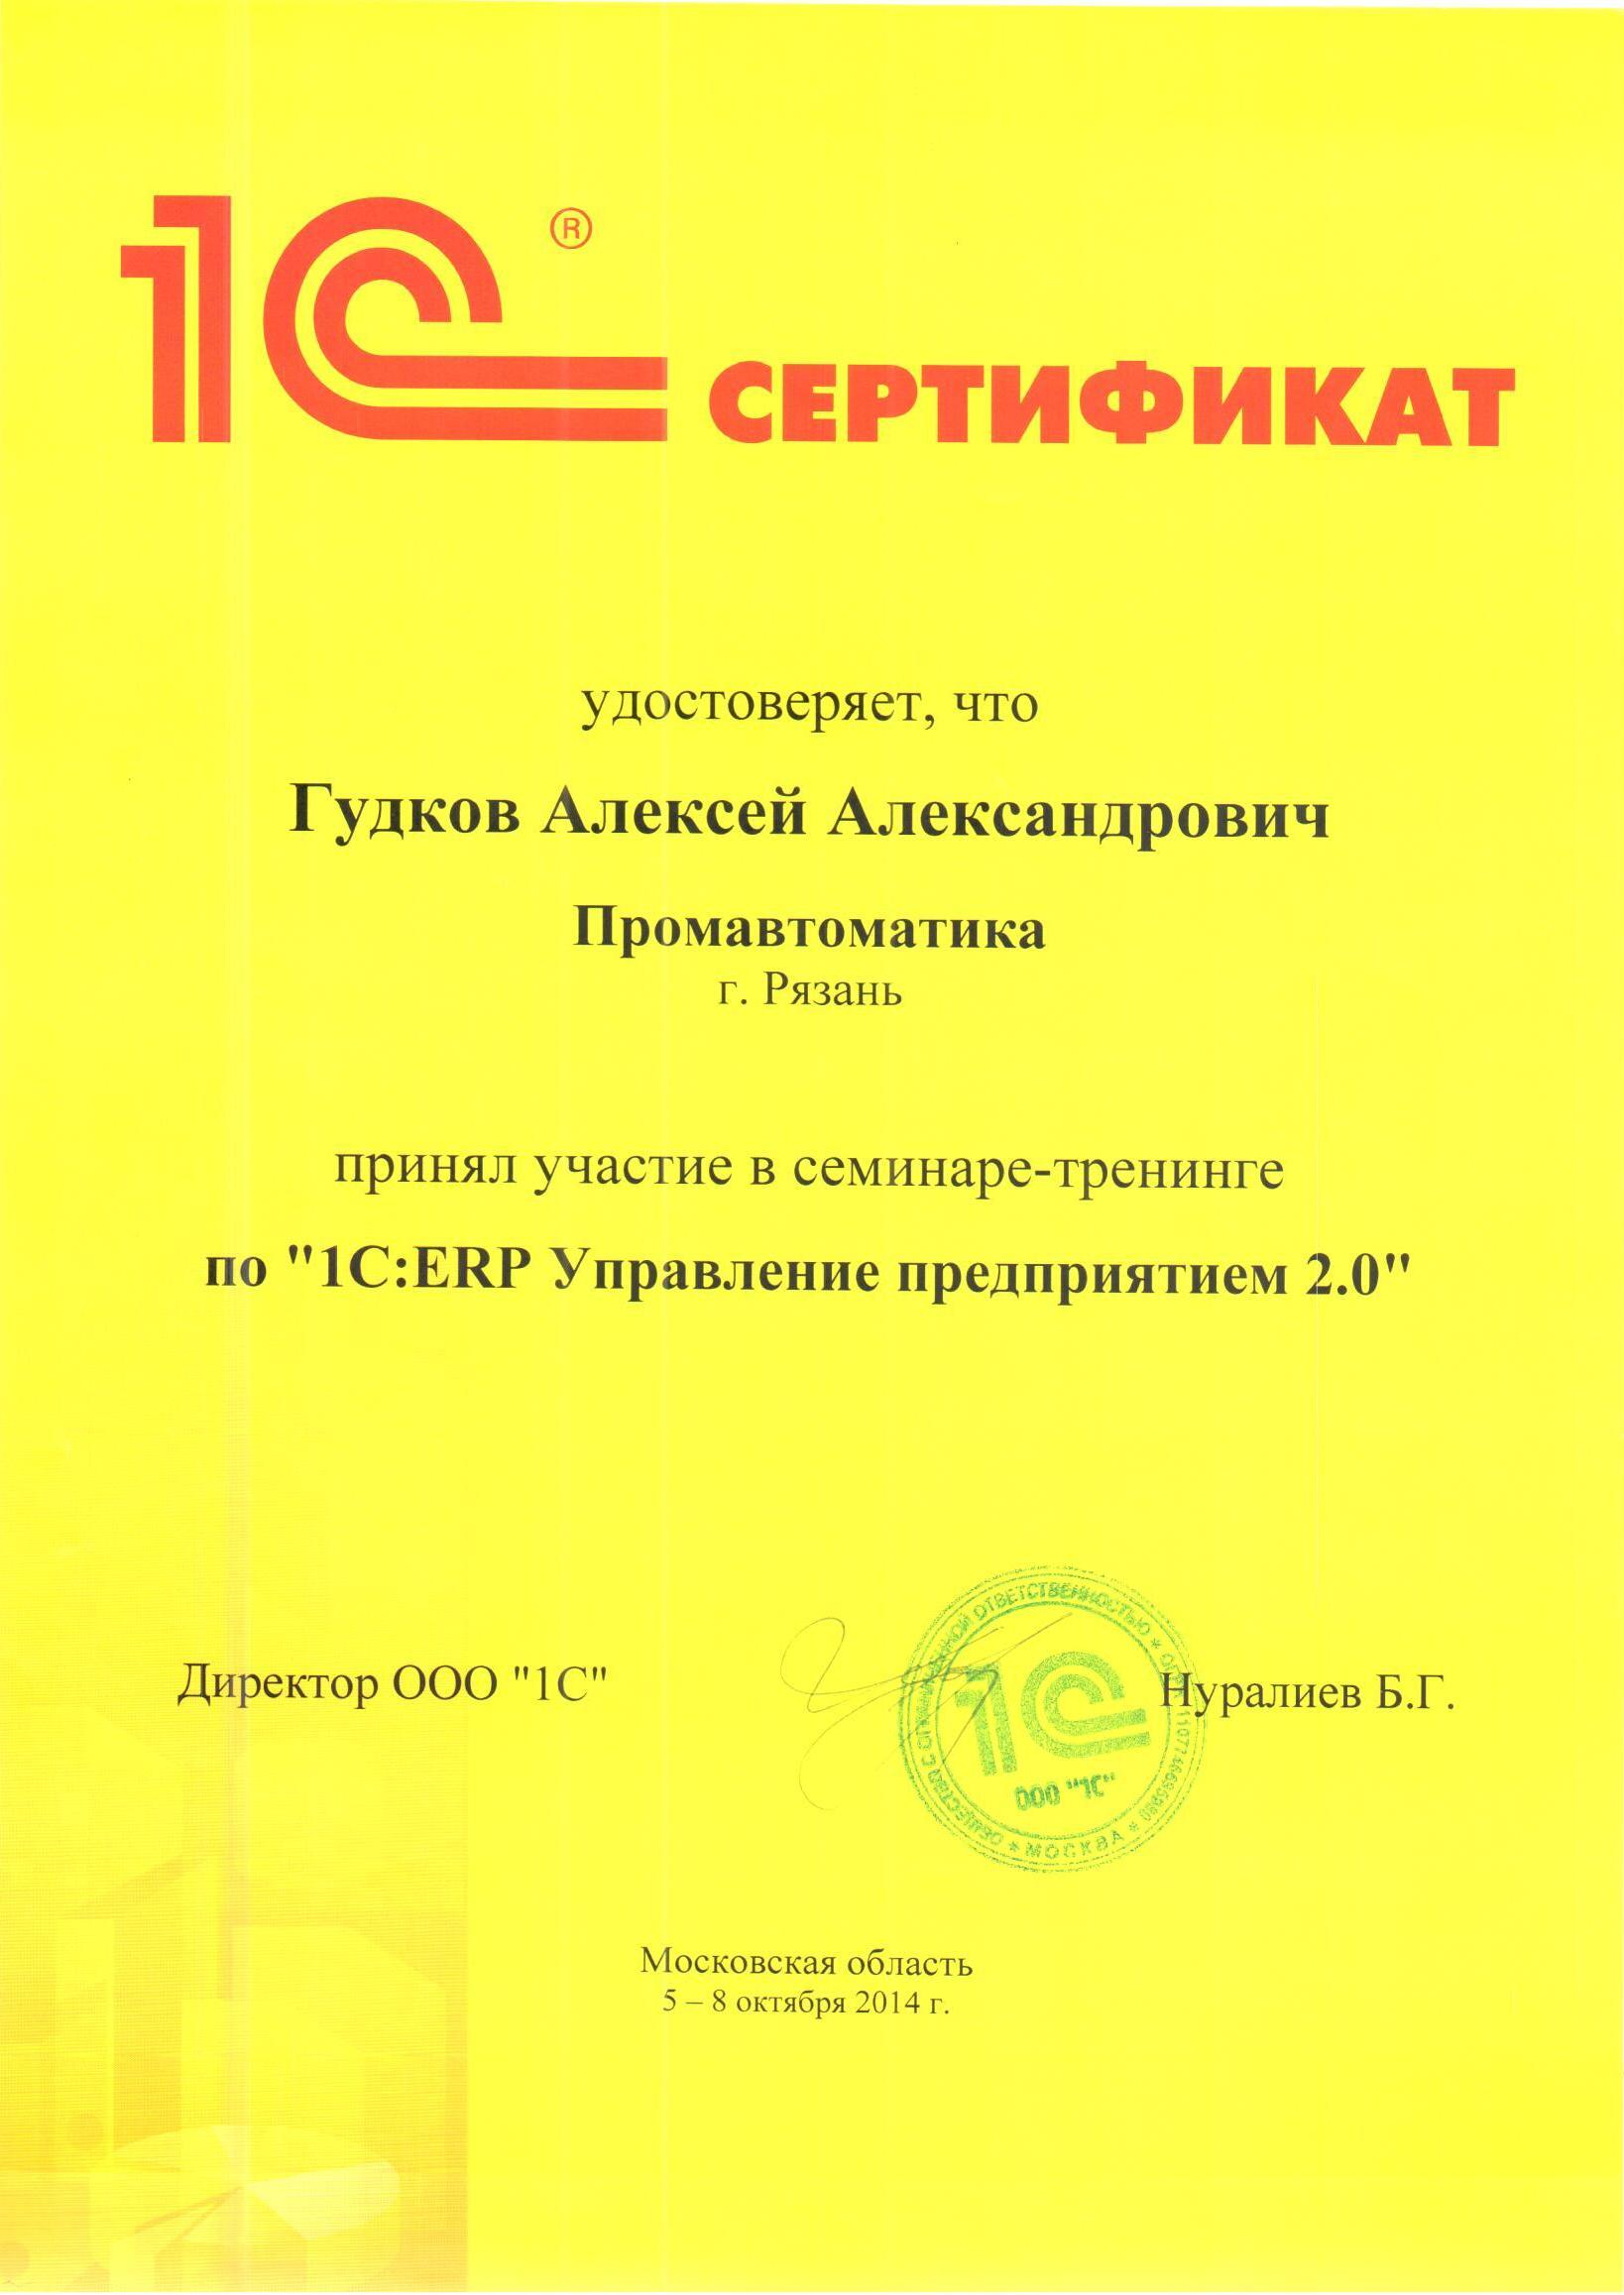 Сертификат0001.jpg